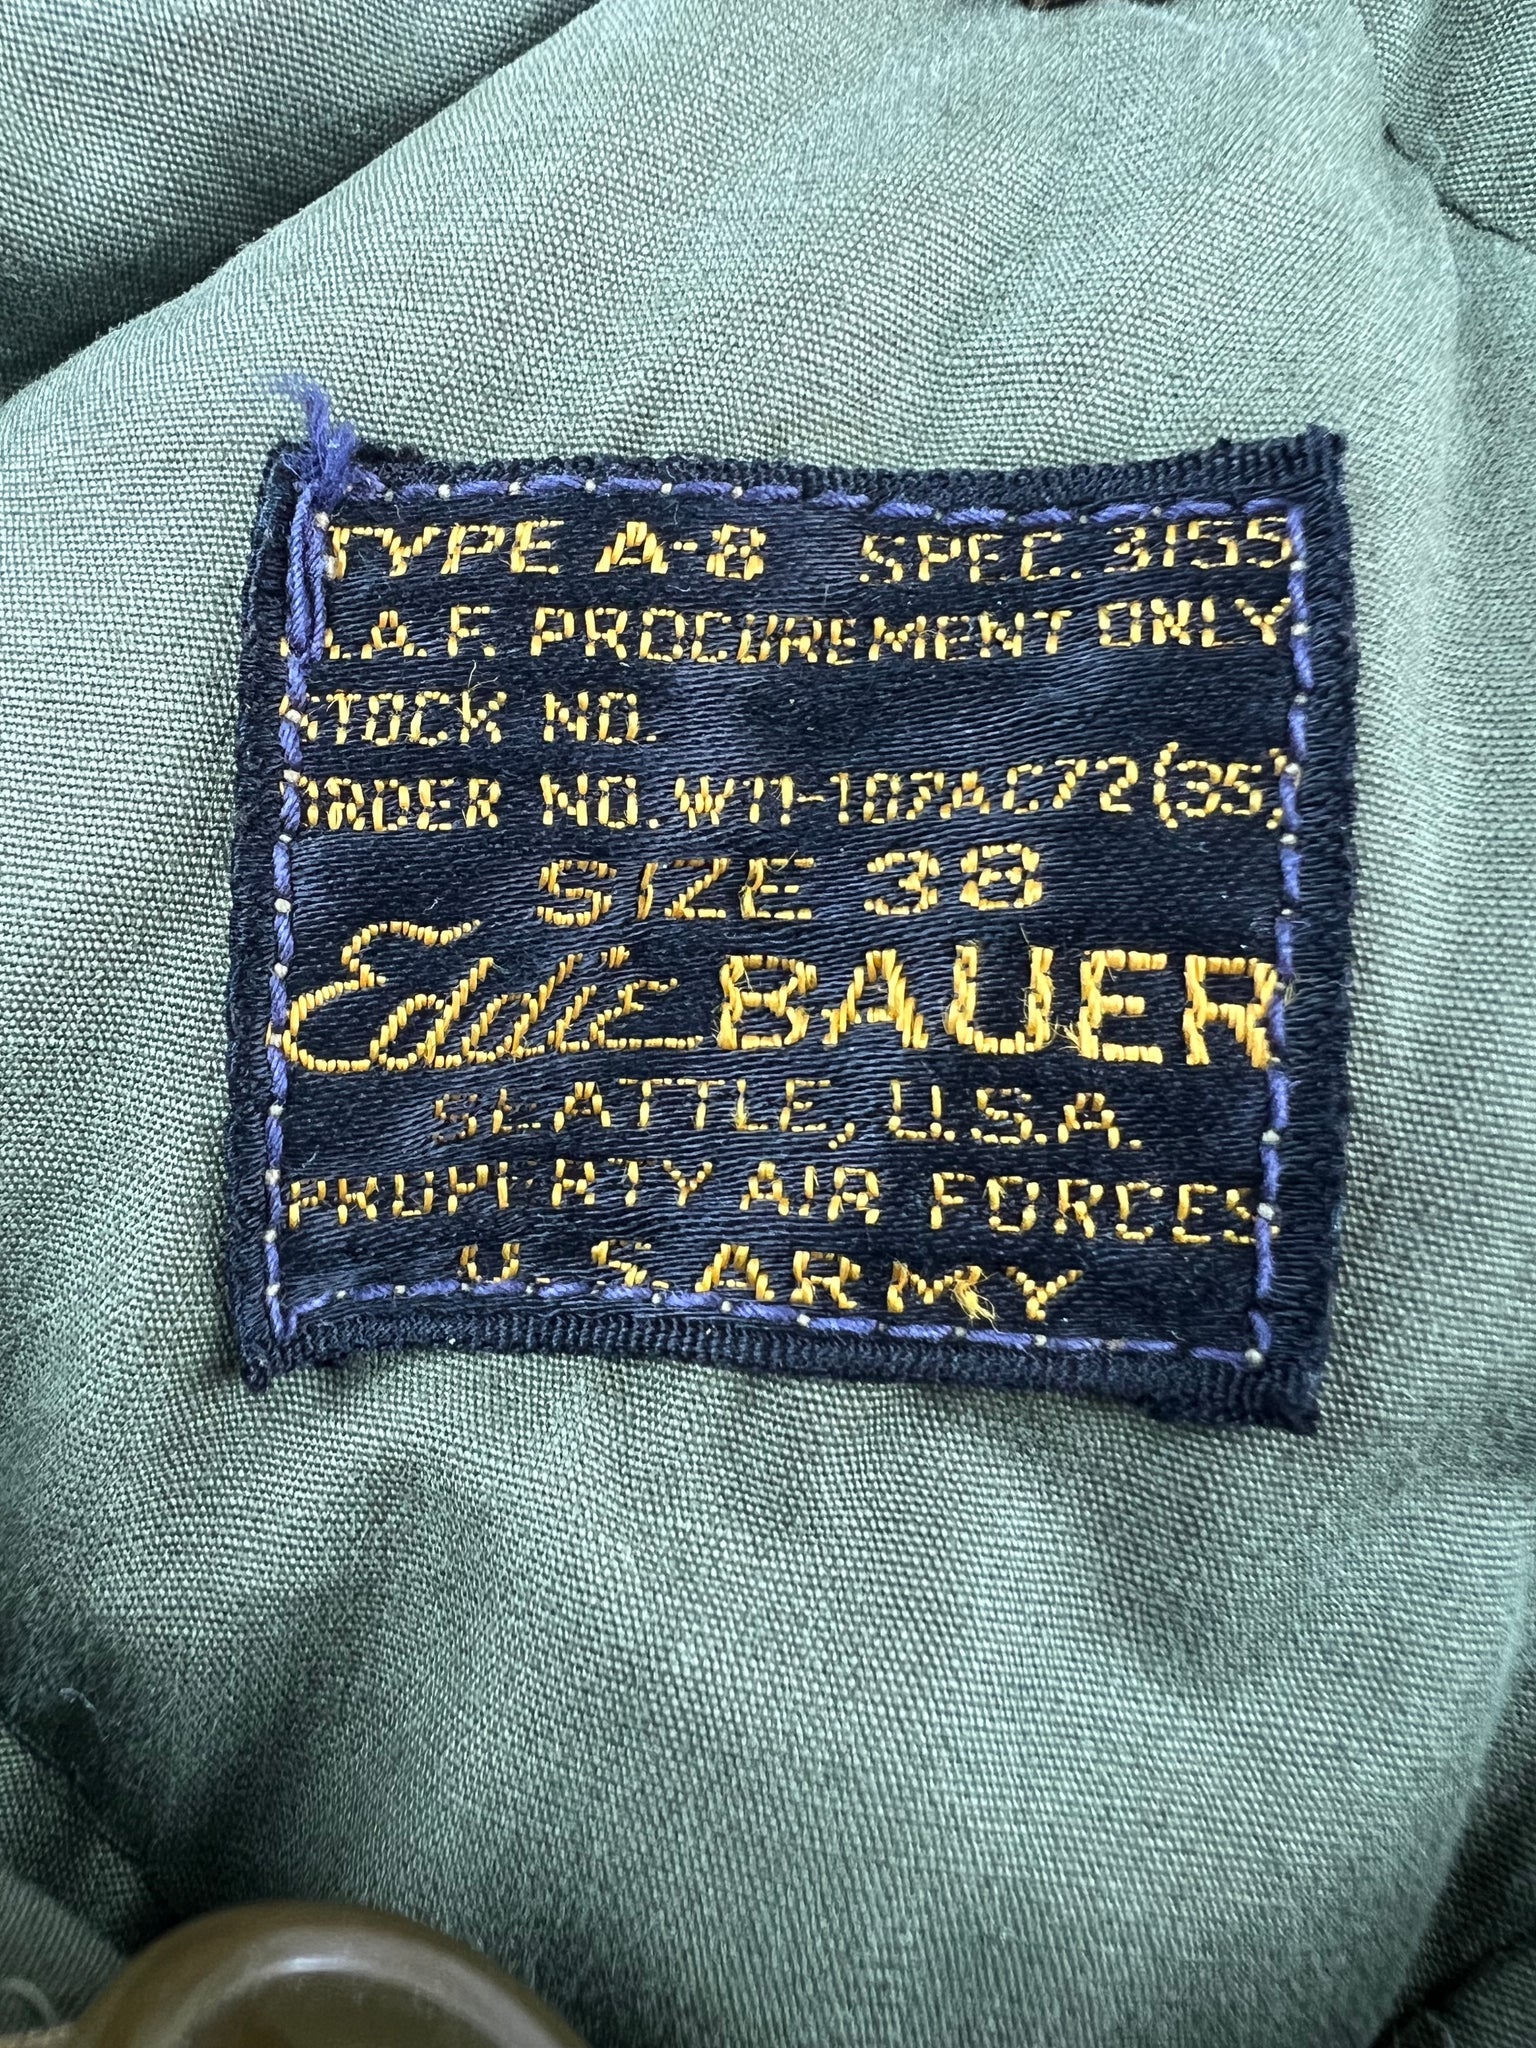 WW2 A8 Eddie Bauer US Army down pants 36x30”